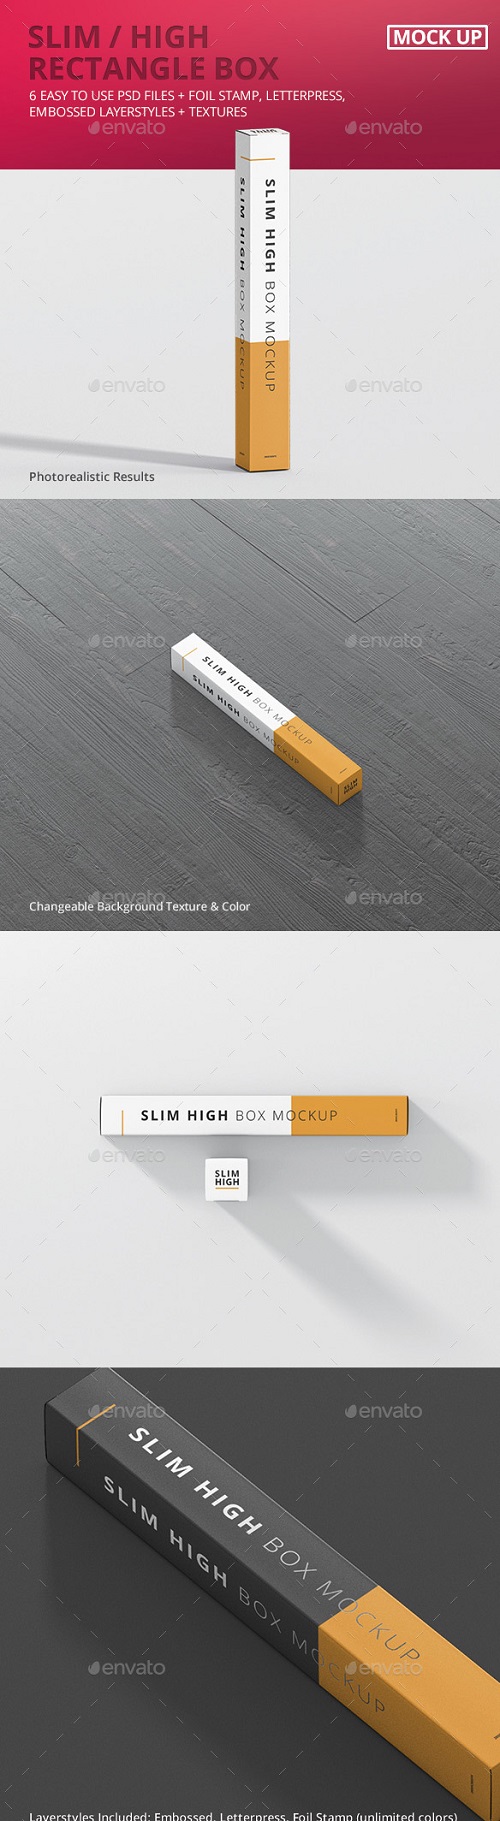 Box Mockup - Slim High Rectangle - 20605817